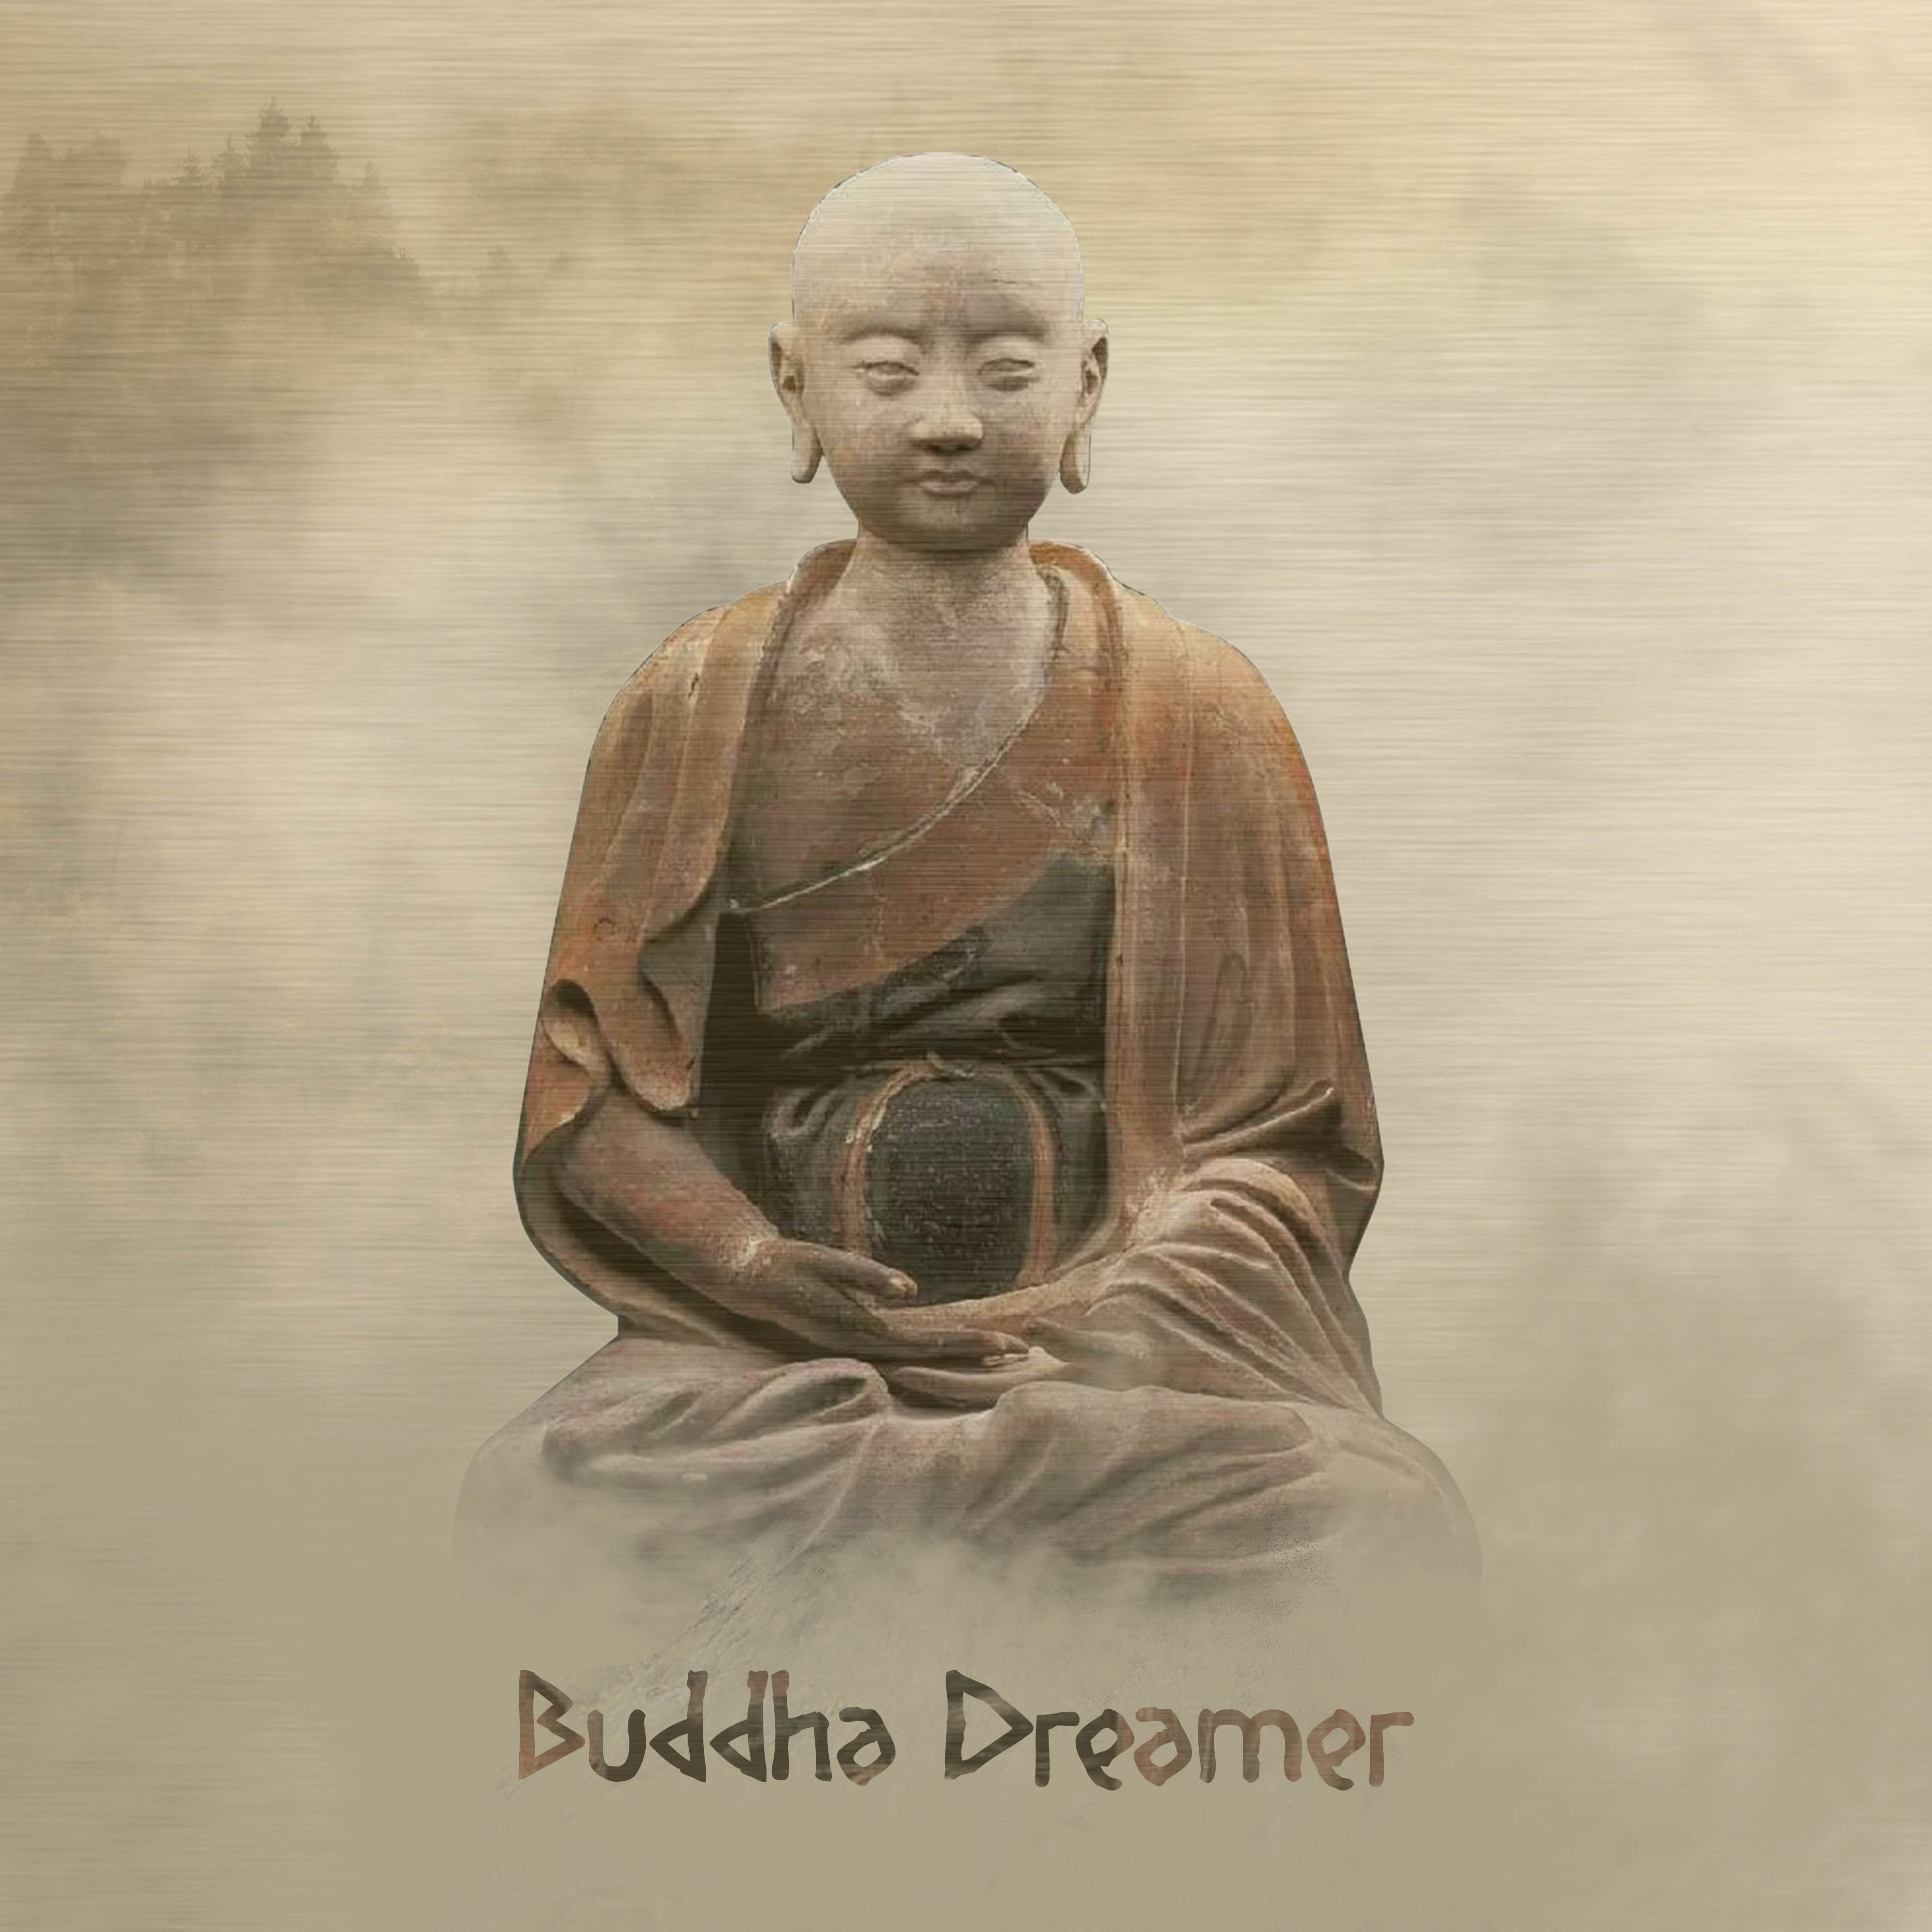 Buddha Dreamer